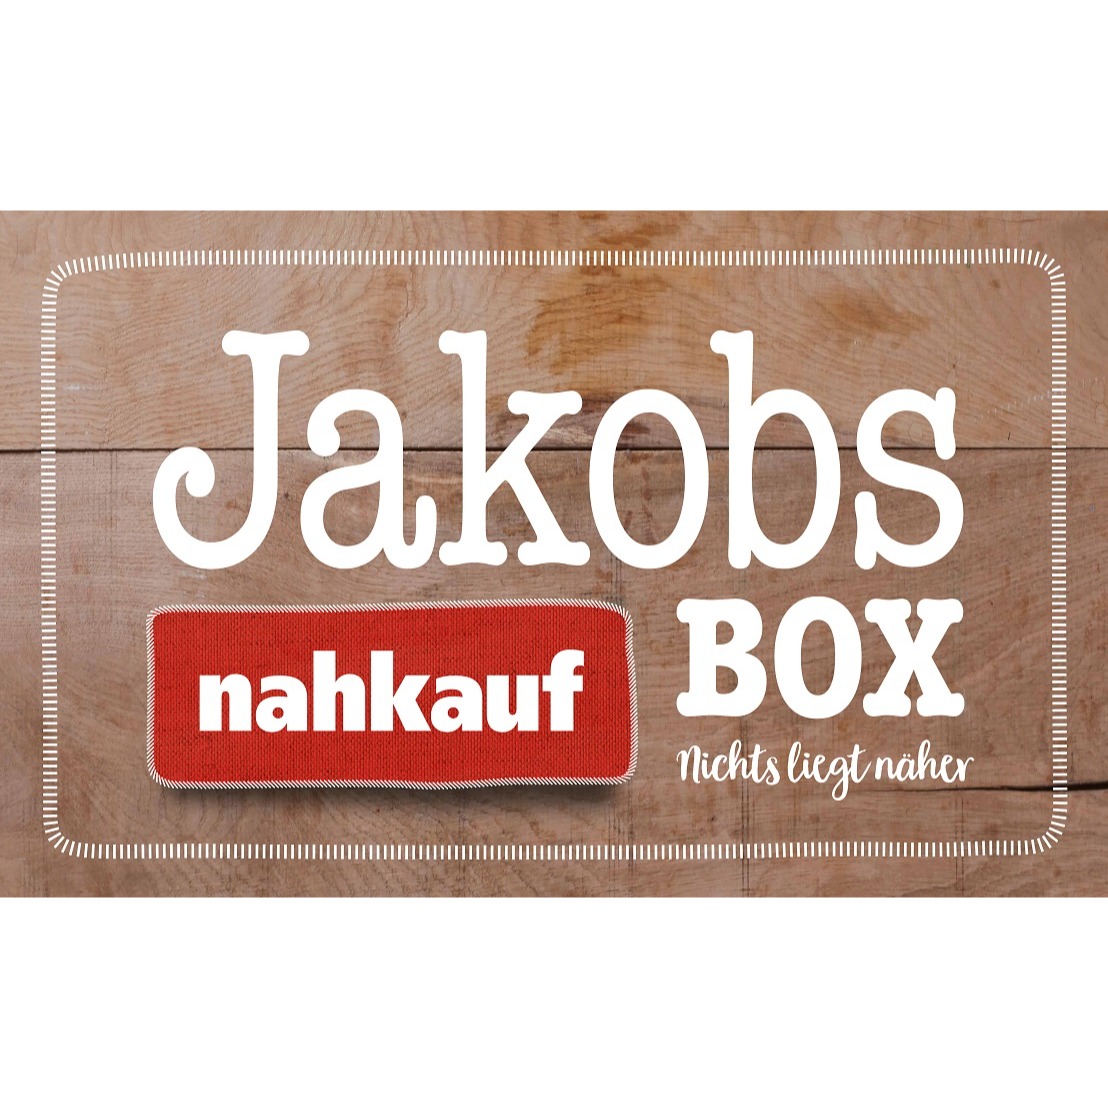 Logo von Jakob's nahkauf Box